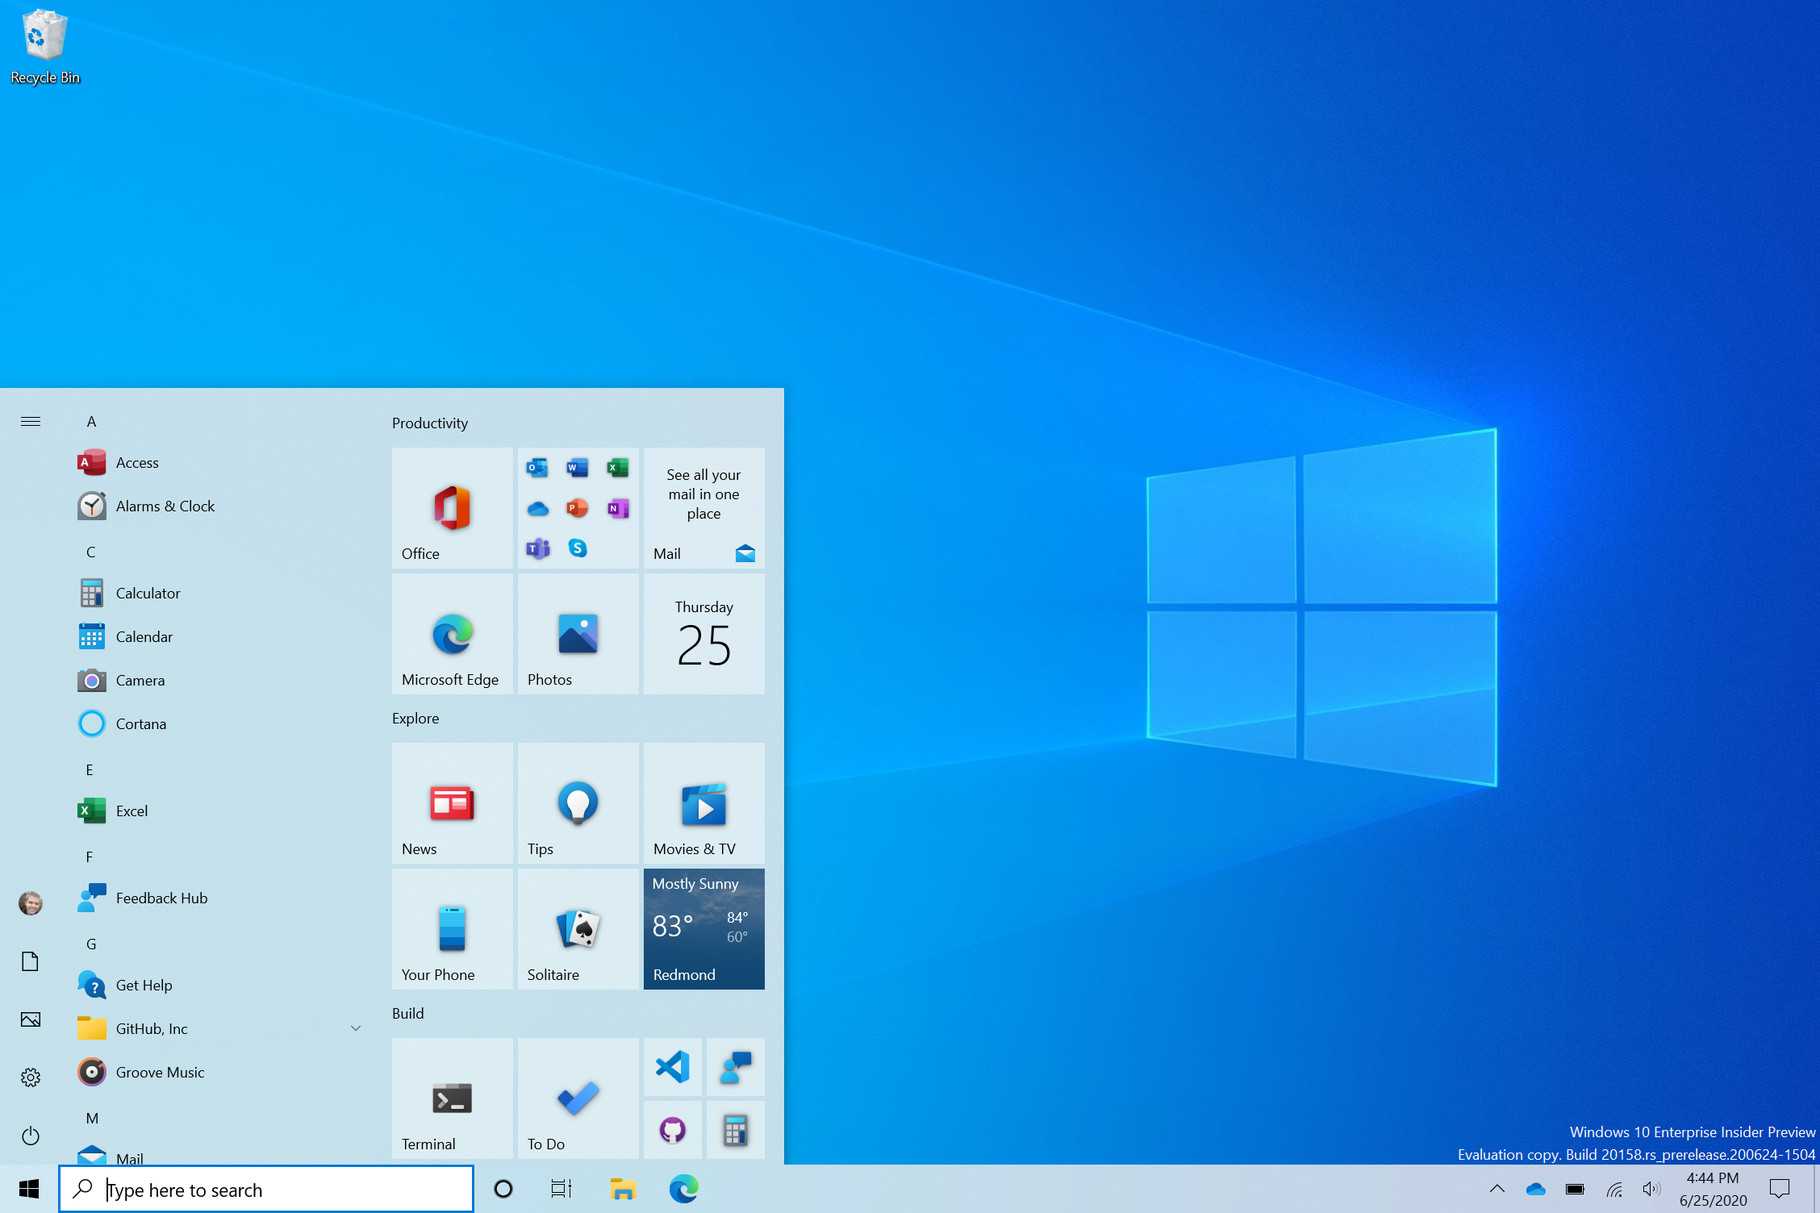 Windows 10 : настройка меню пуск и панели задач